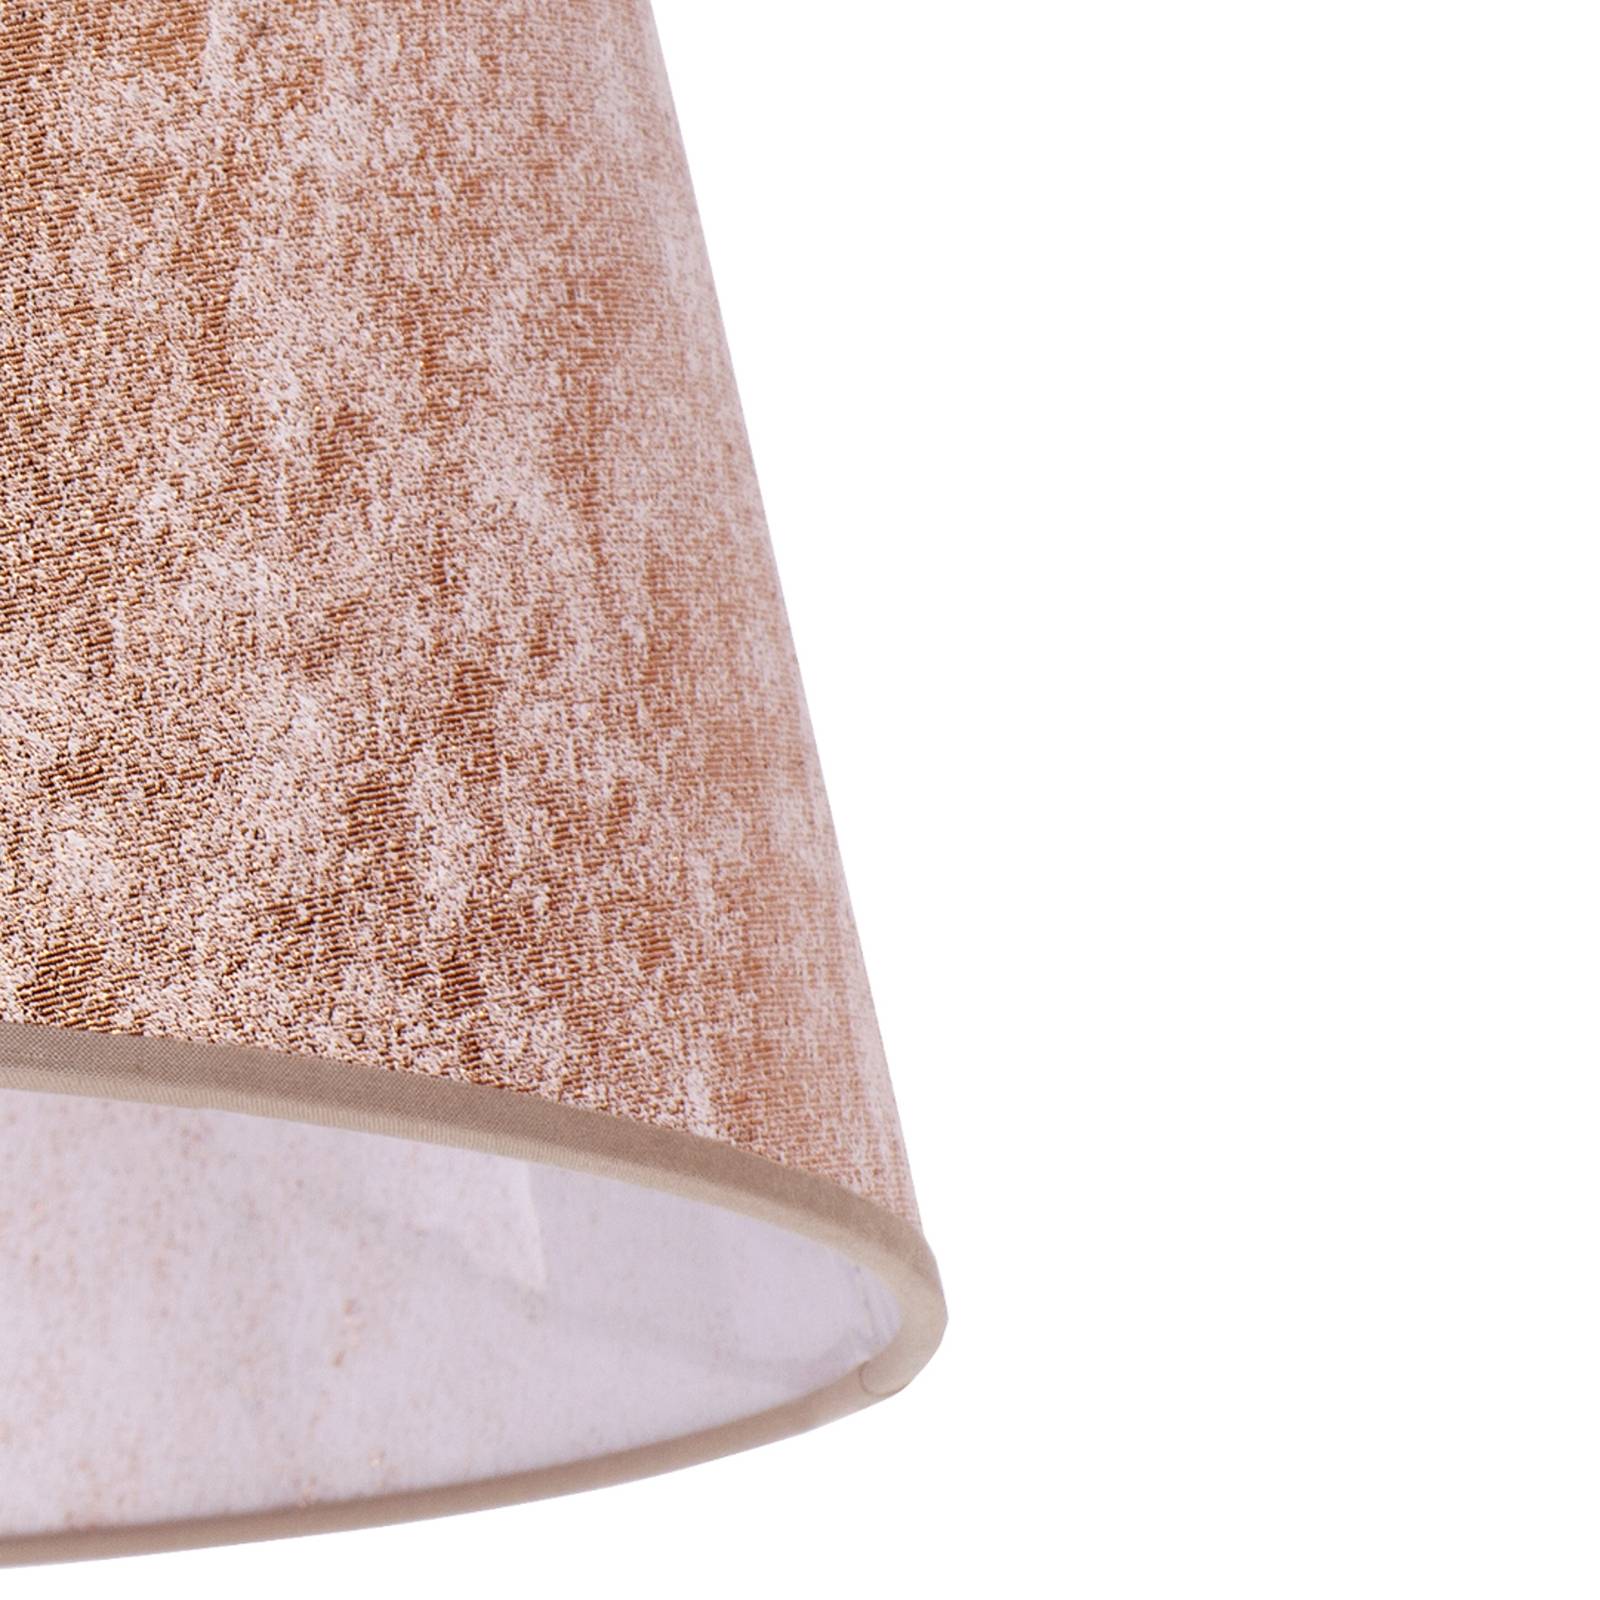 Cone lámpaernyő 22,5 cm magas, réz fémbevon.